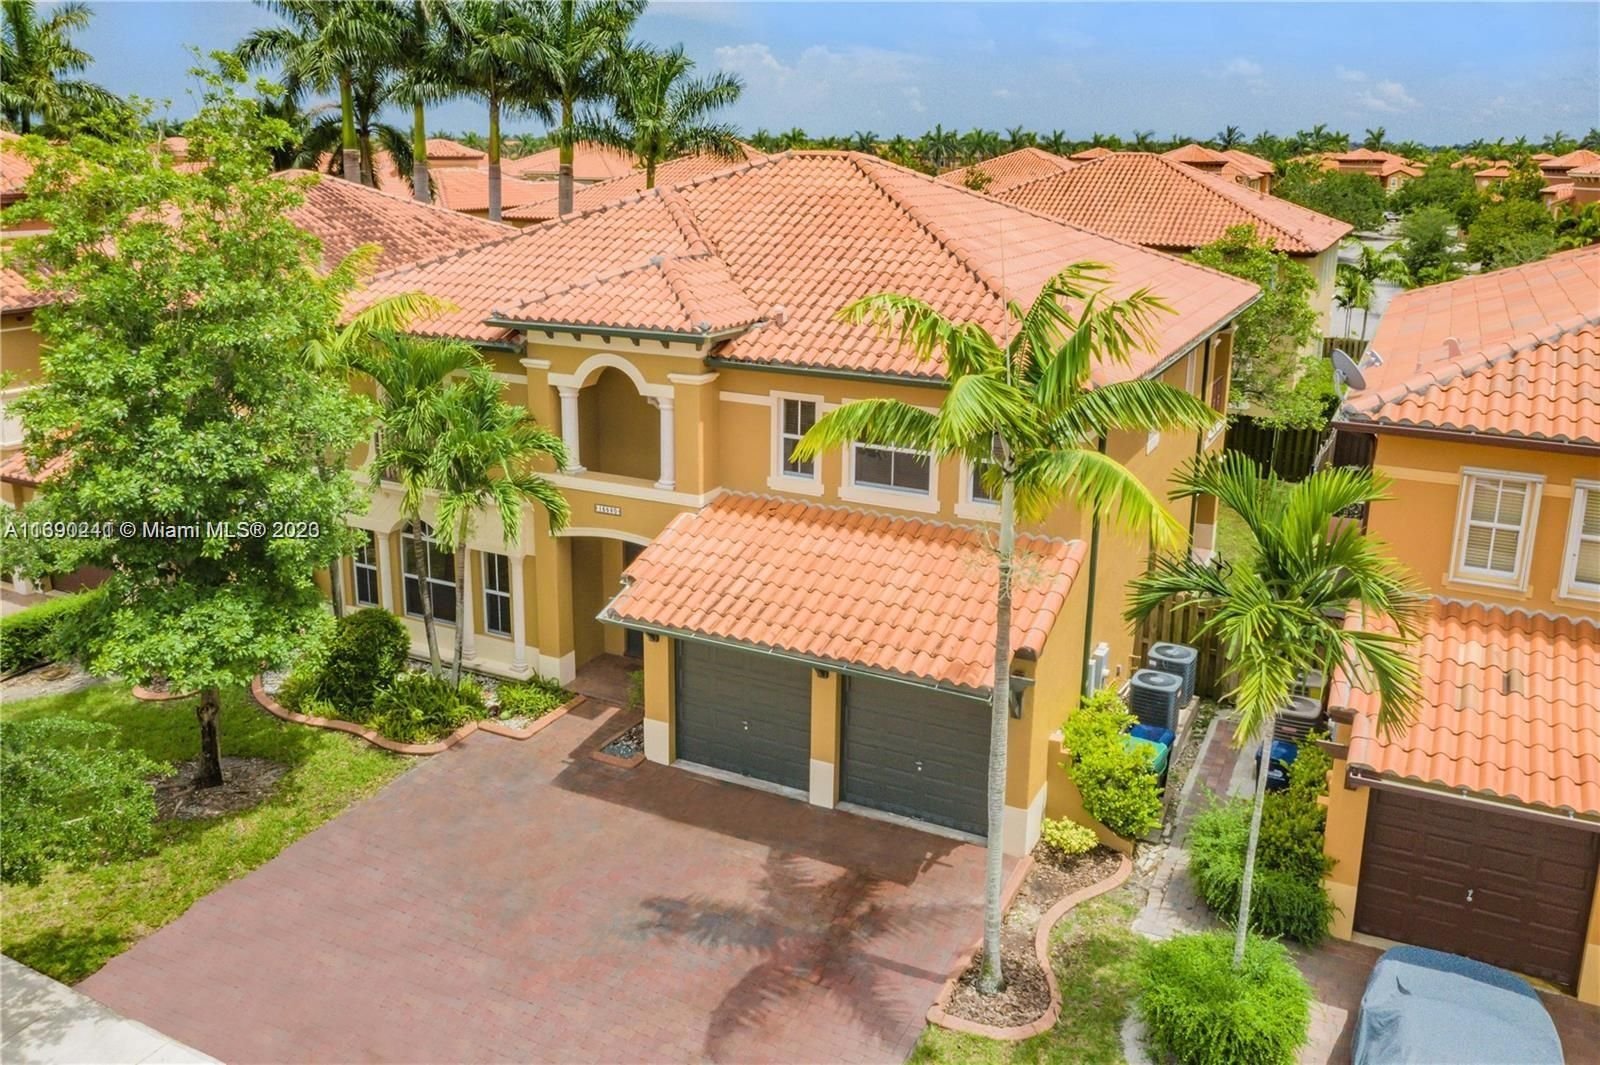 Real estate property located at 15580 26th Ter, Miami-Dade County, Miami, FL